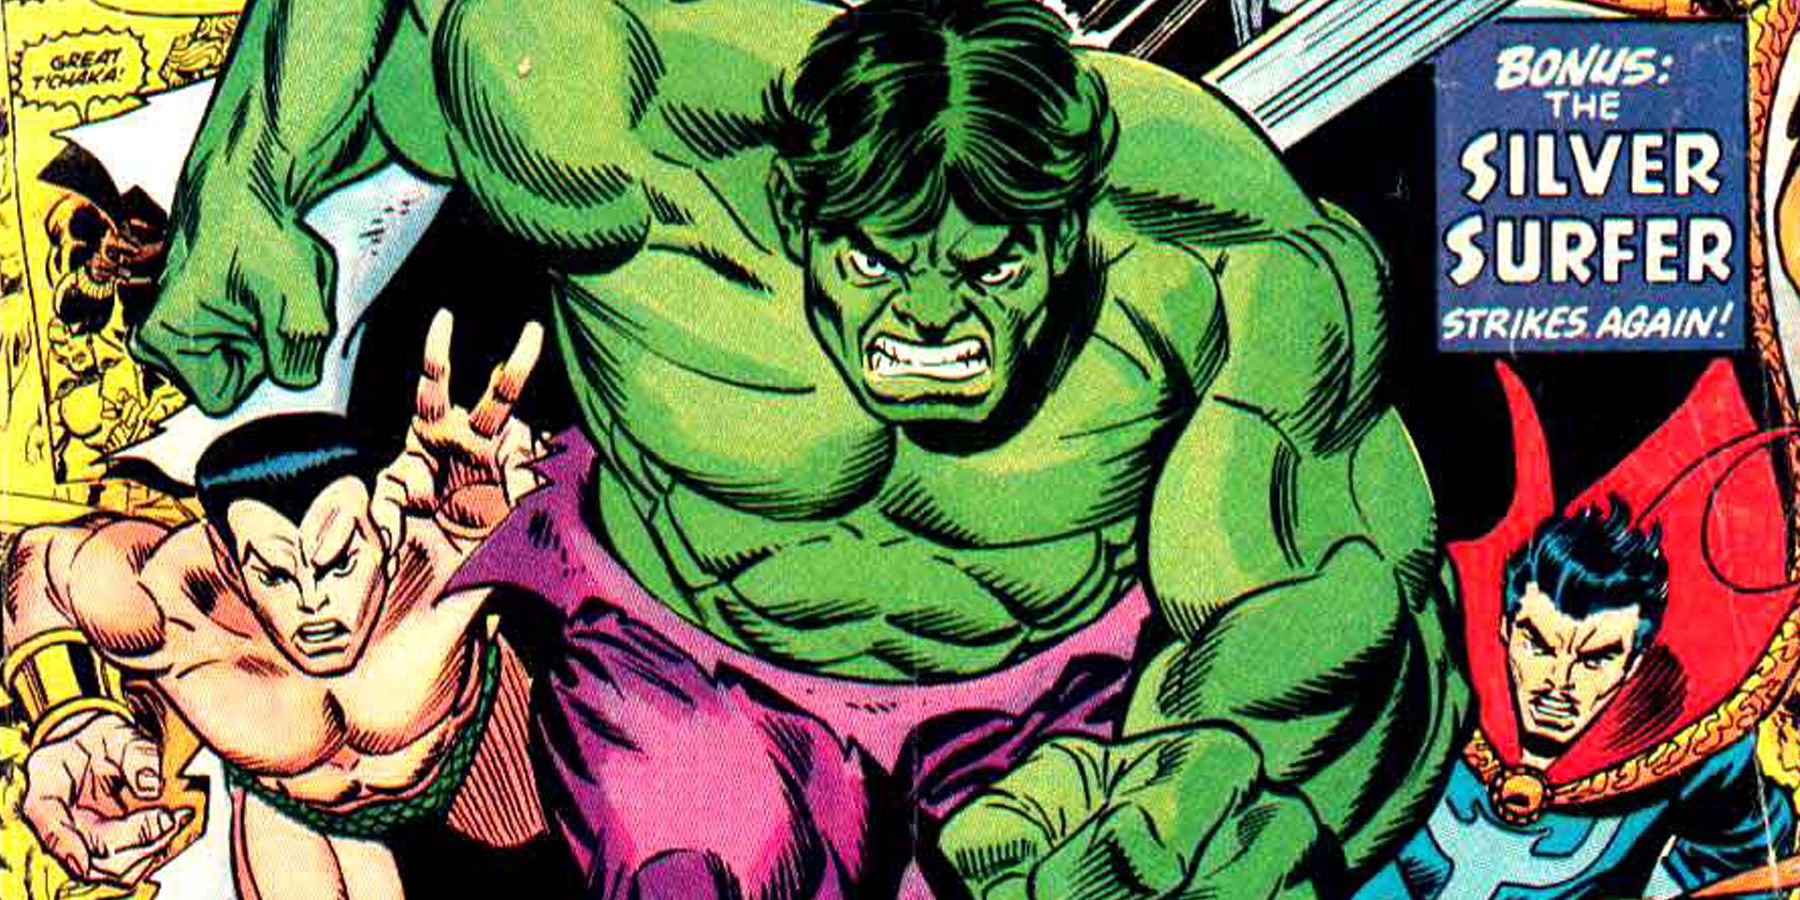 Defenders members Namor, Hulk and Doctor Strange charge into battle